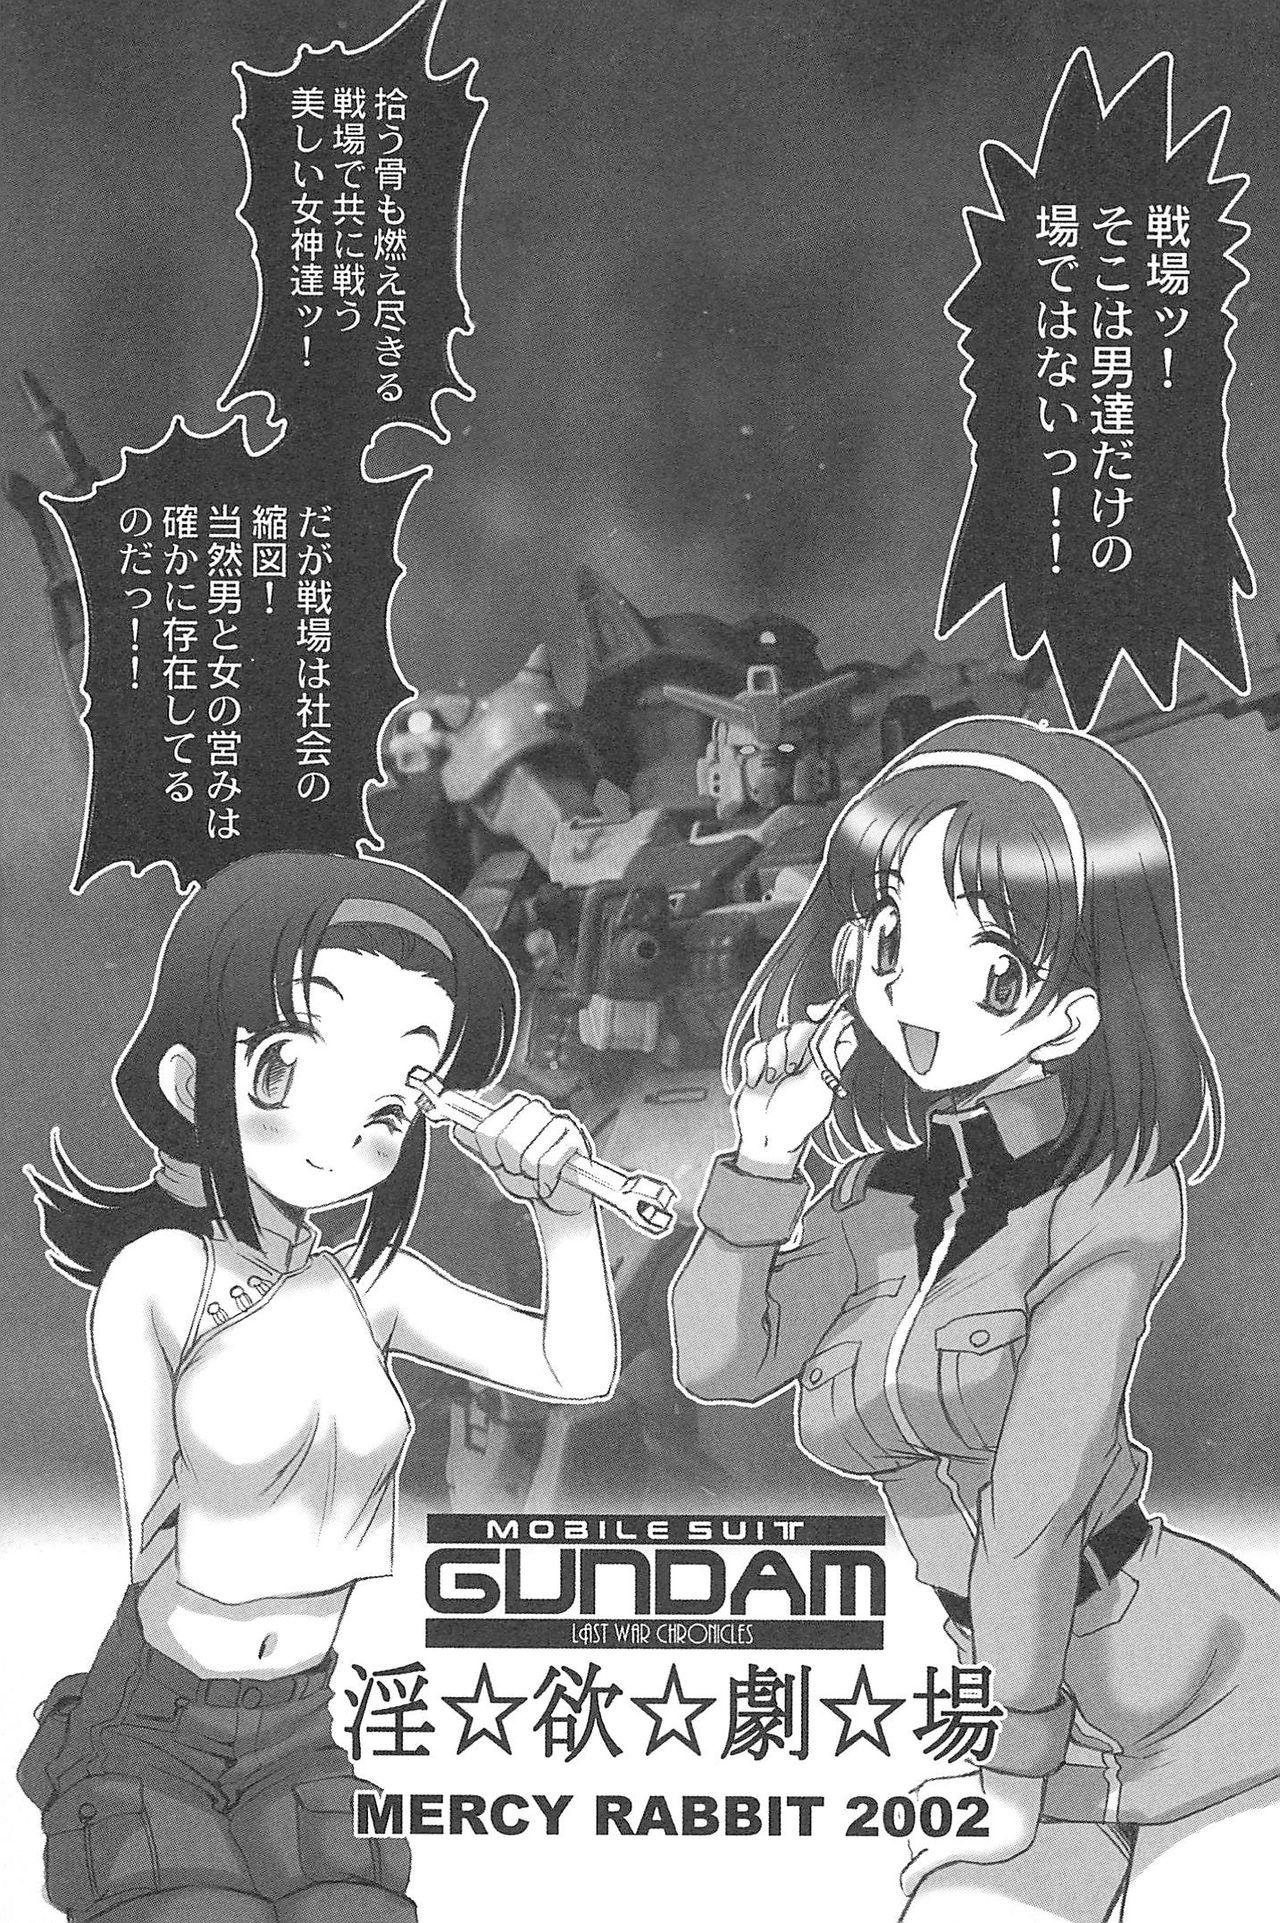 Ariake International X-rated Manga Festival Mercy Rabbit SPECIAL 132